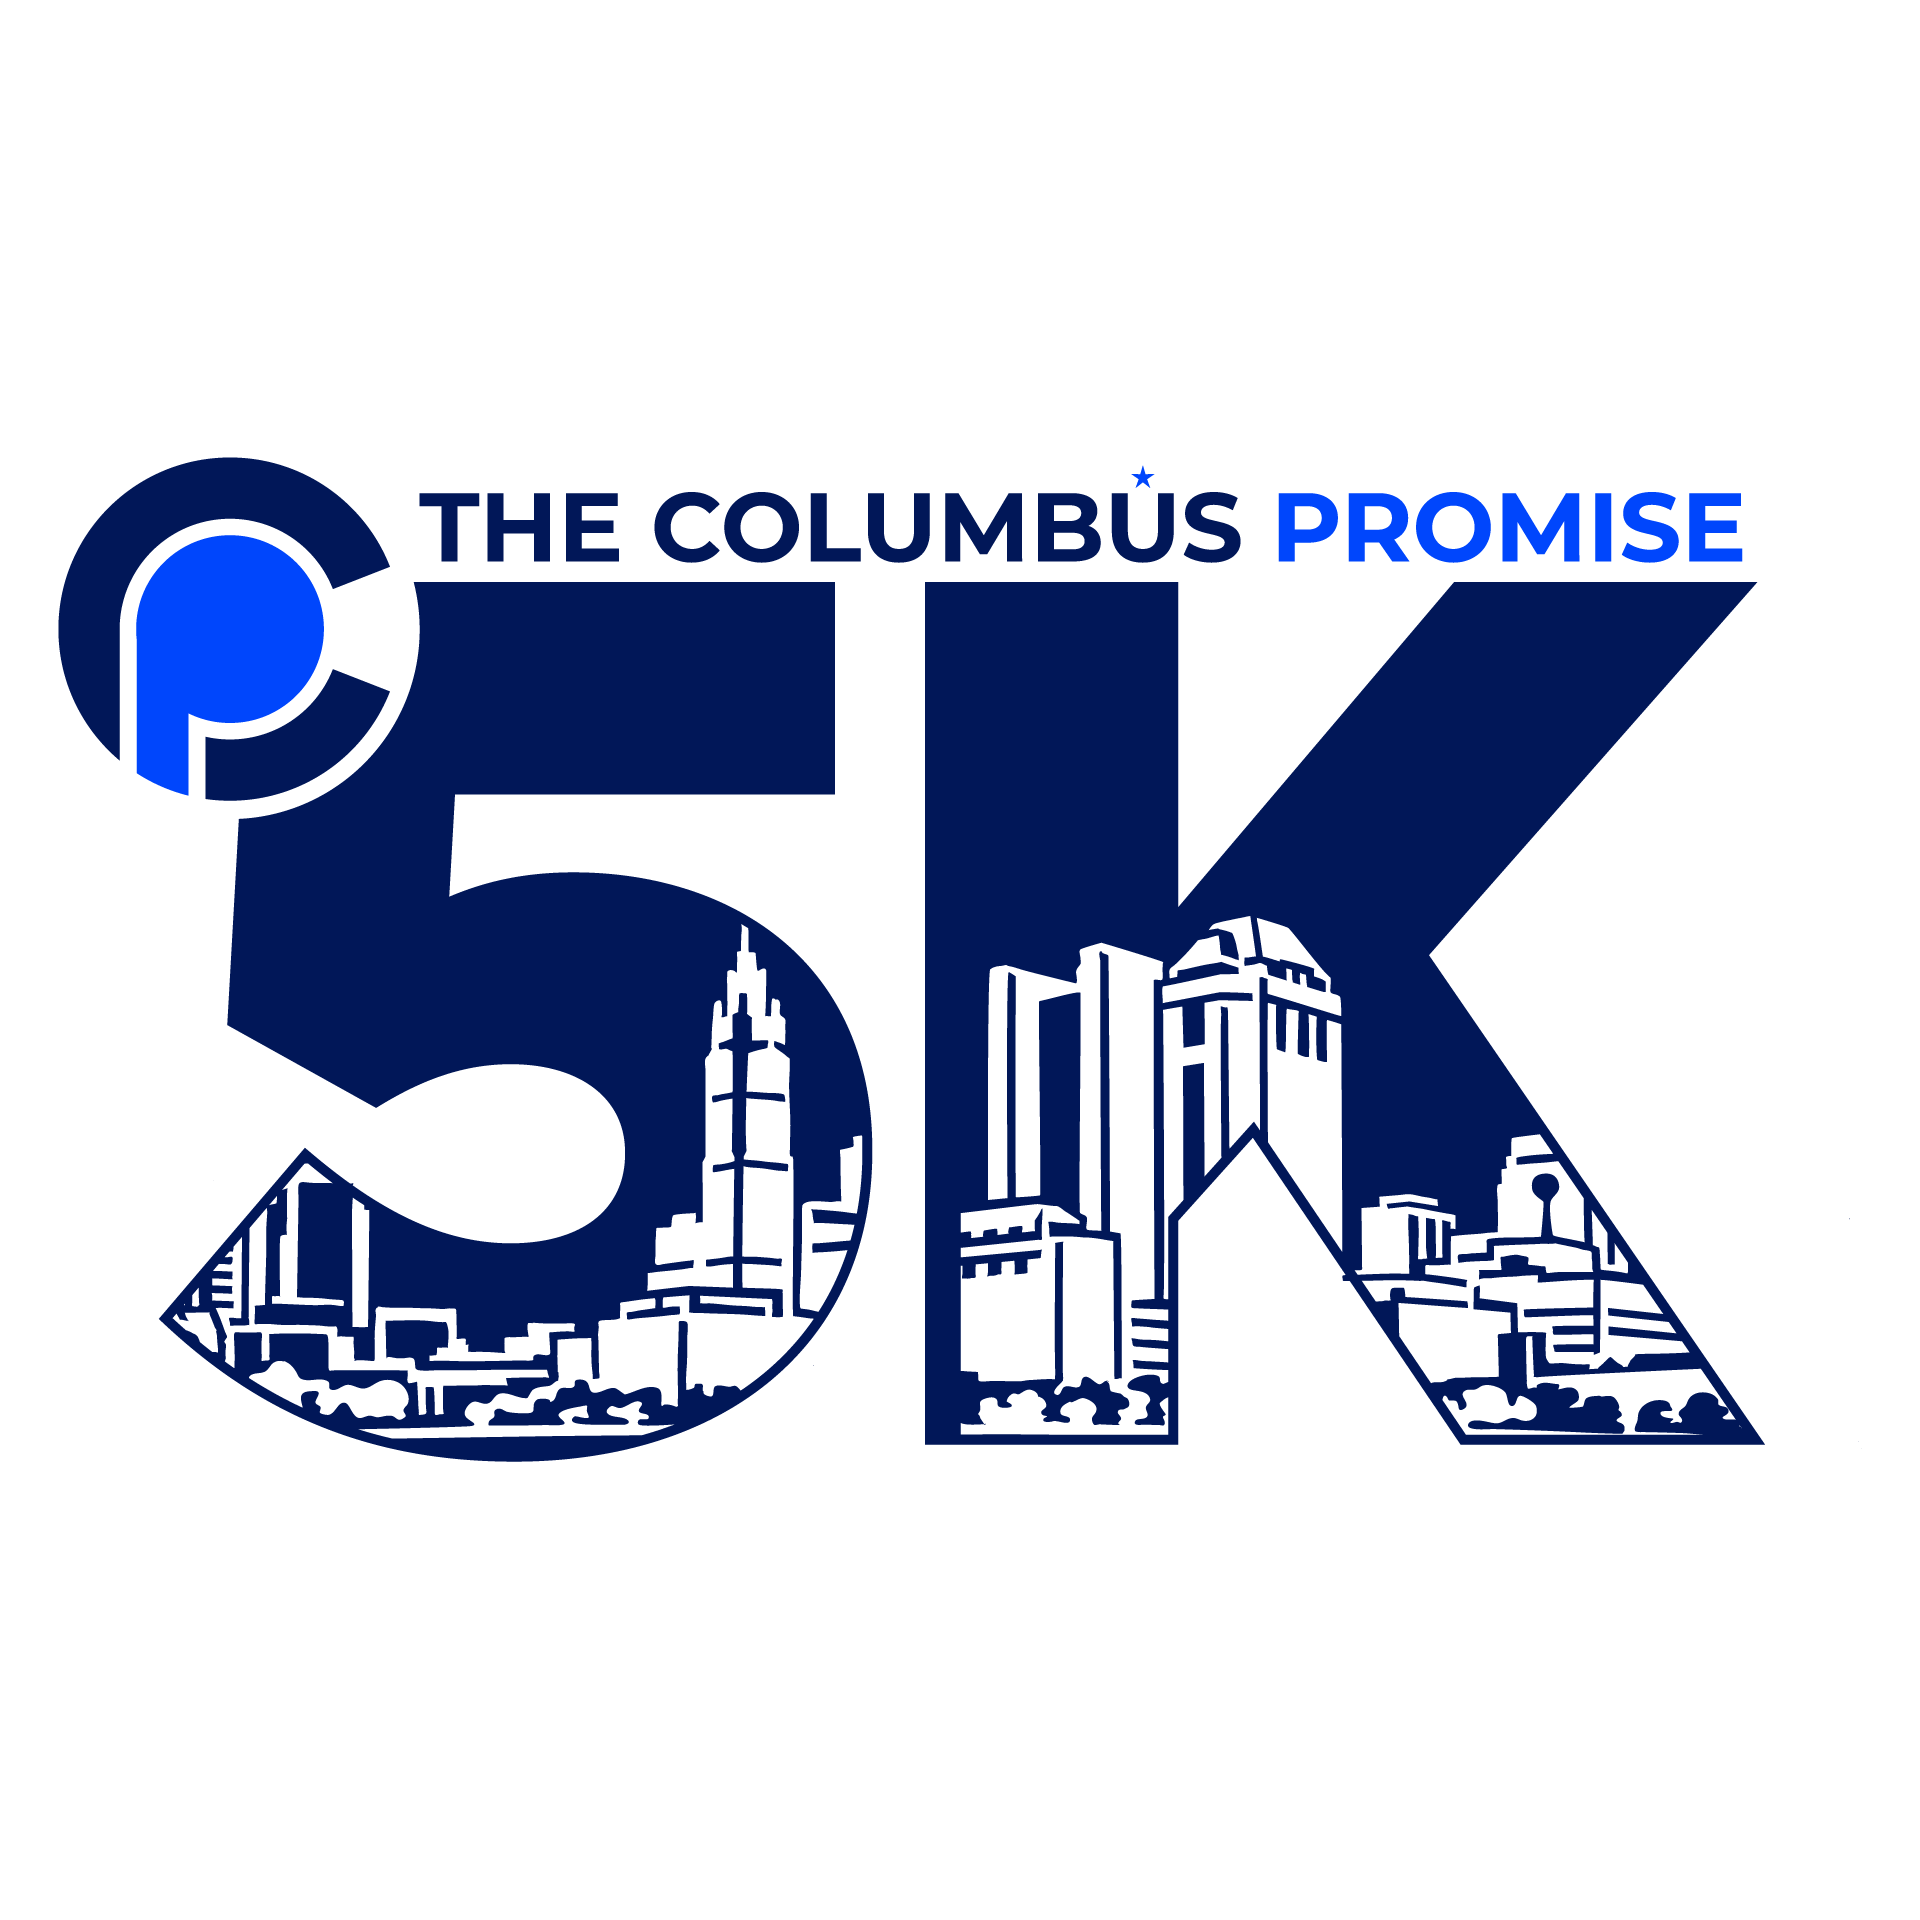 OhioHealth Capital City Half Marathon To Celebrate and Support Columbus Promise Program With Columbus Promise 5K